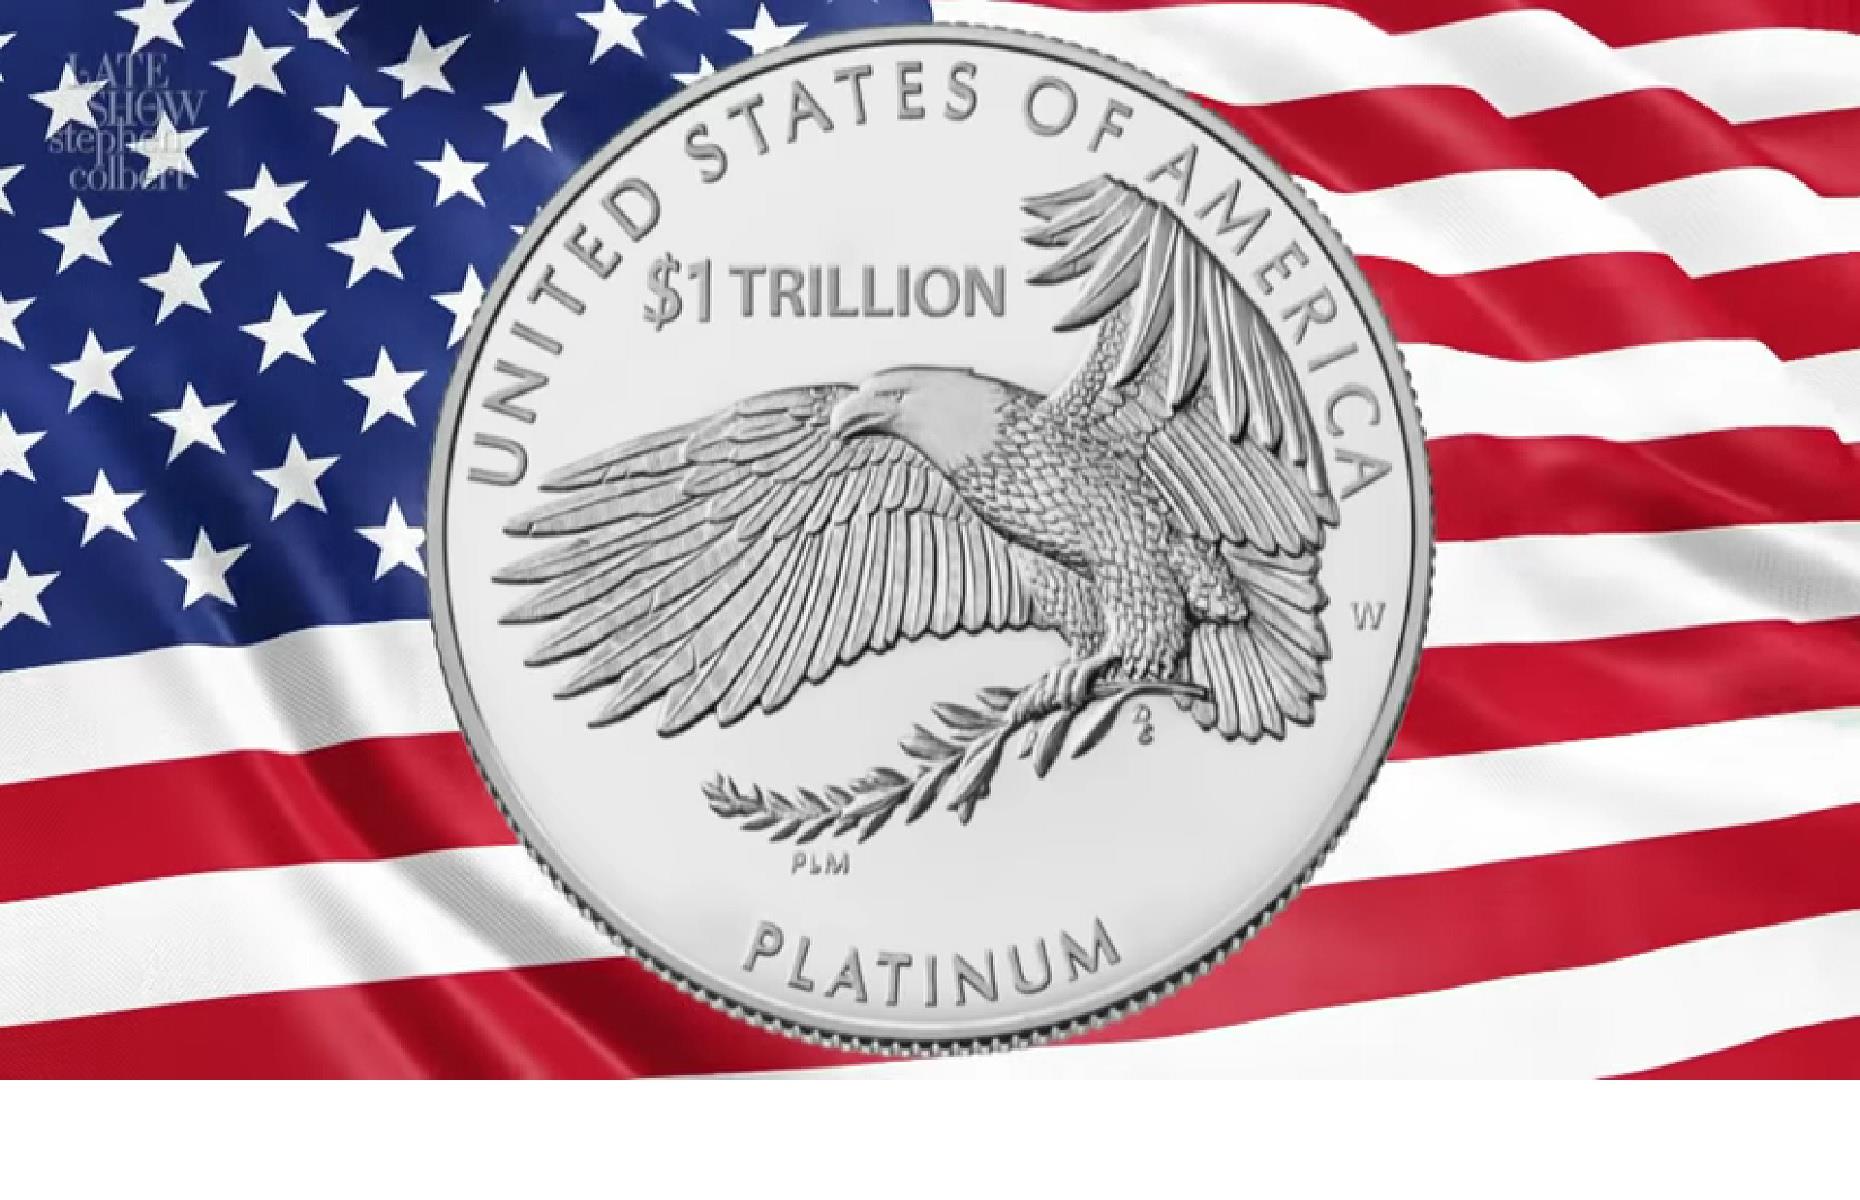 The trillion-dollar coin